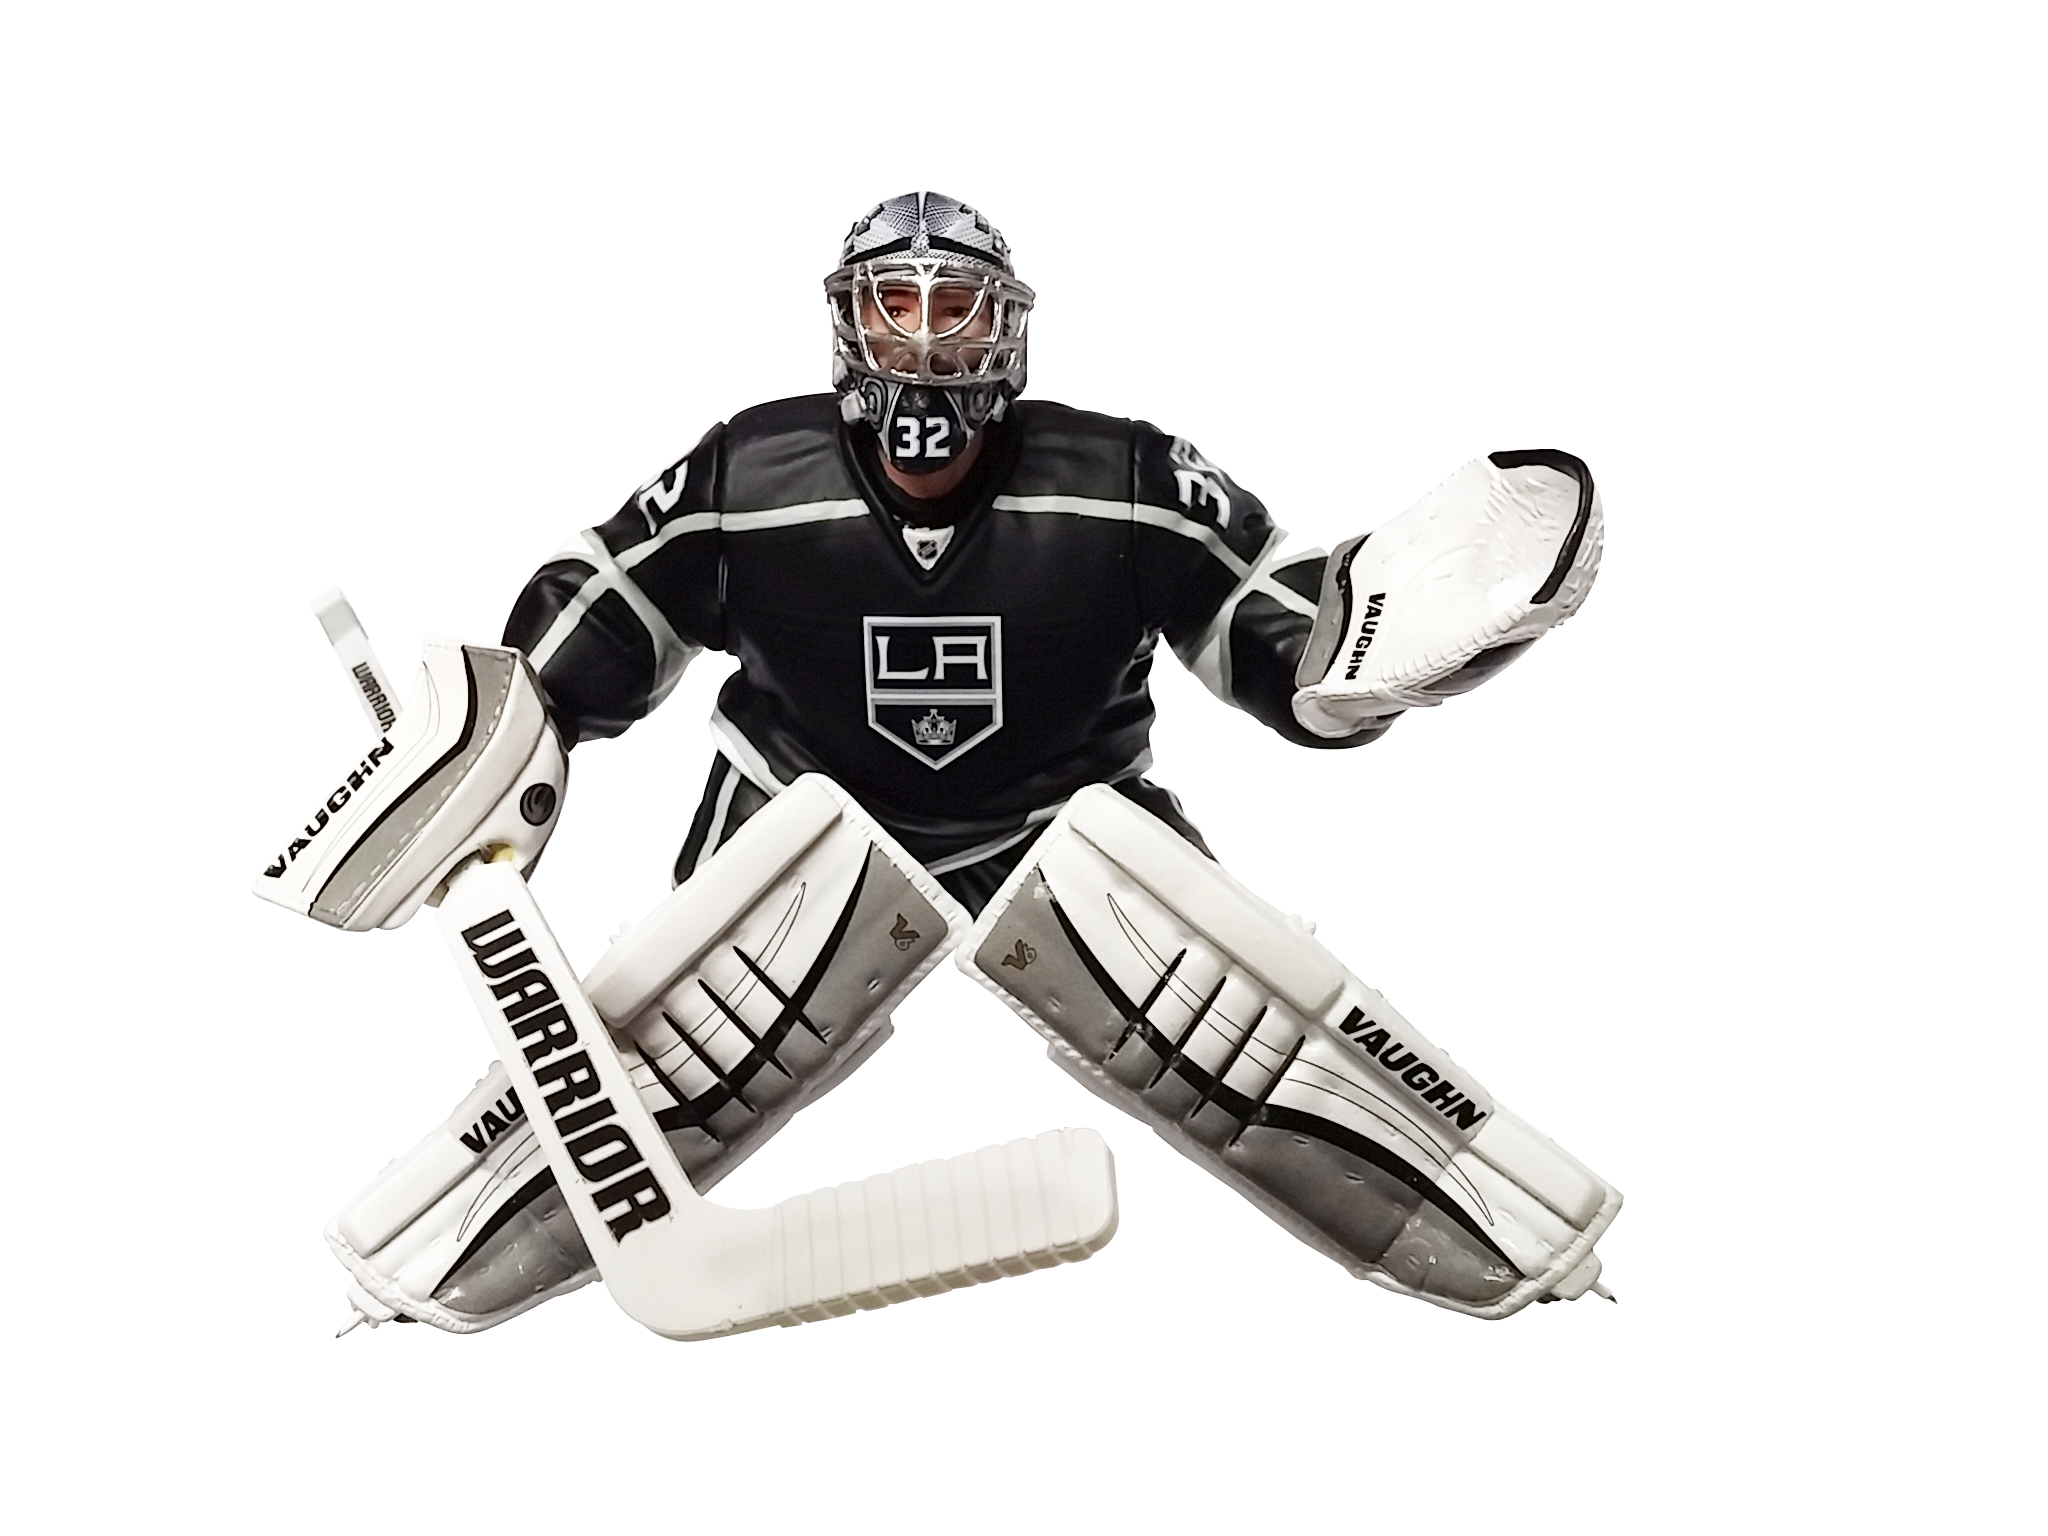 McFarlane NHL Series 32 Henrik Lundqvist Action Figure (White Jersey)